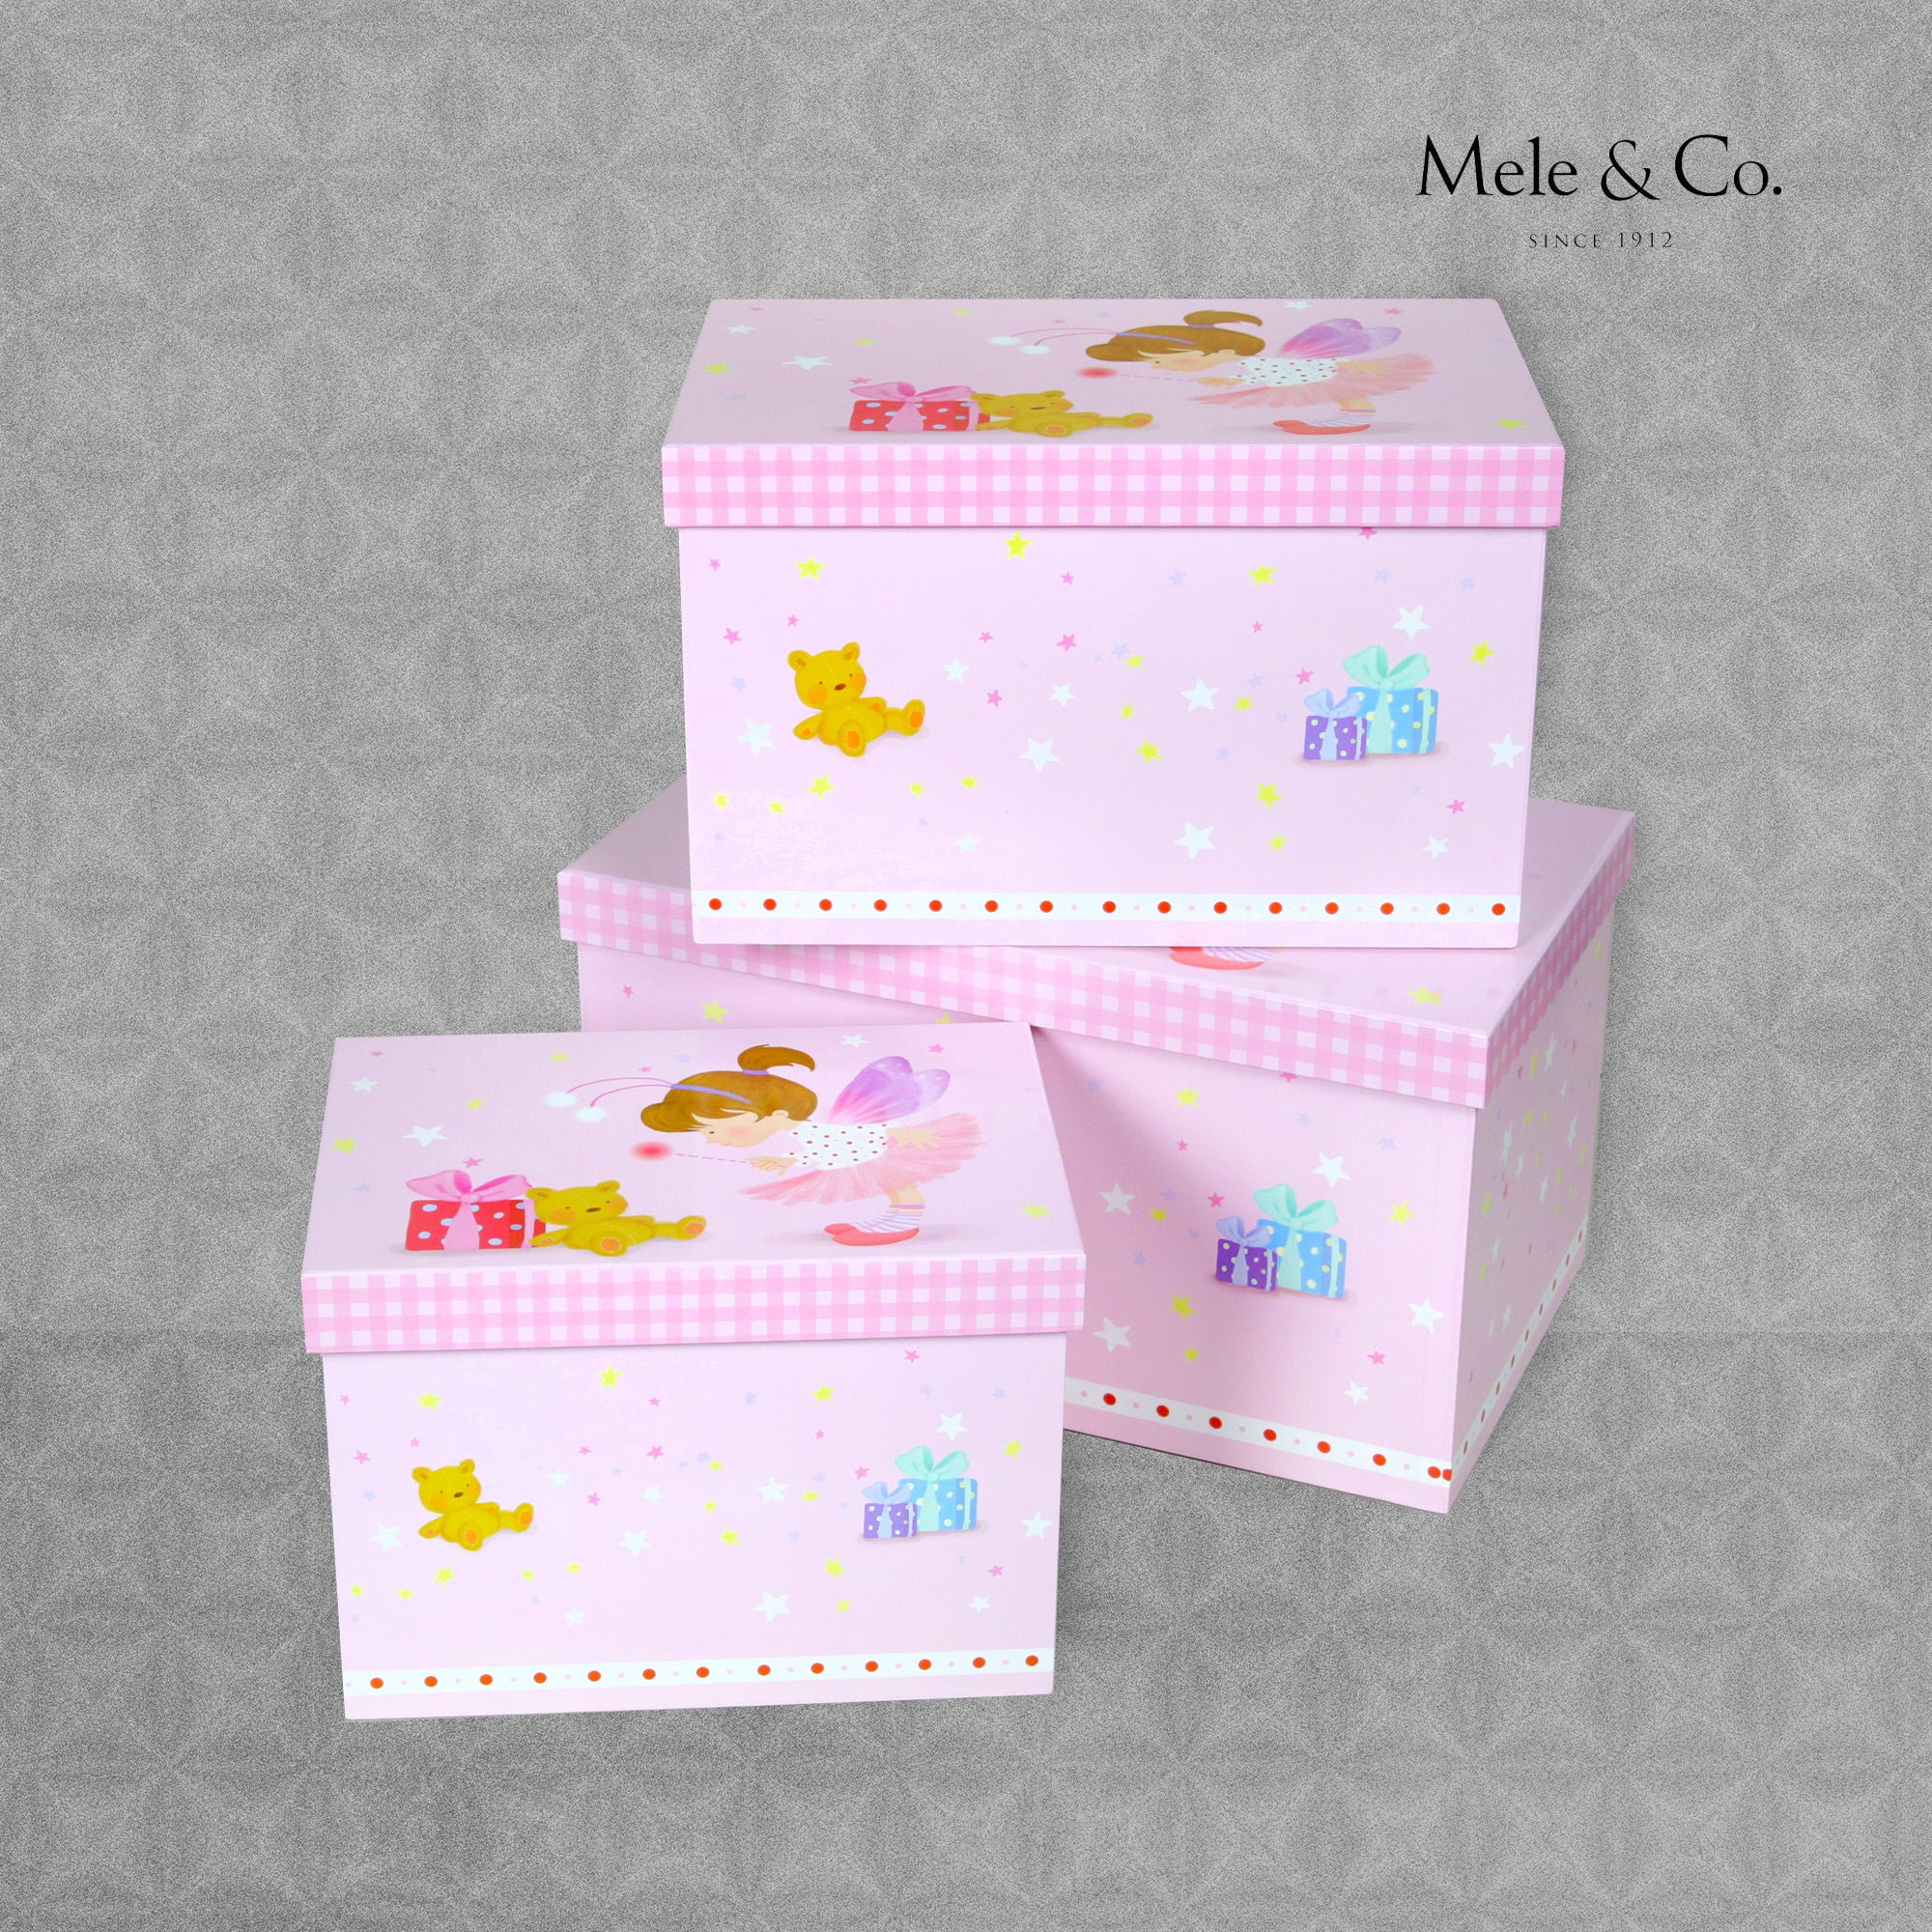 Mele & Co. Fairy Shoe Design Storage Box Set - Pink